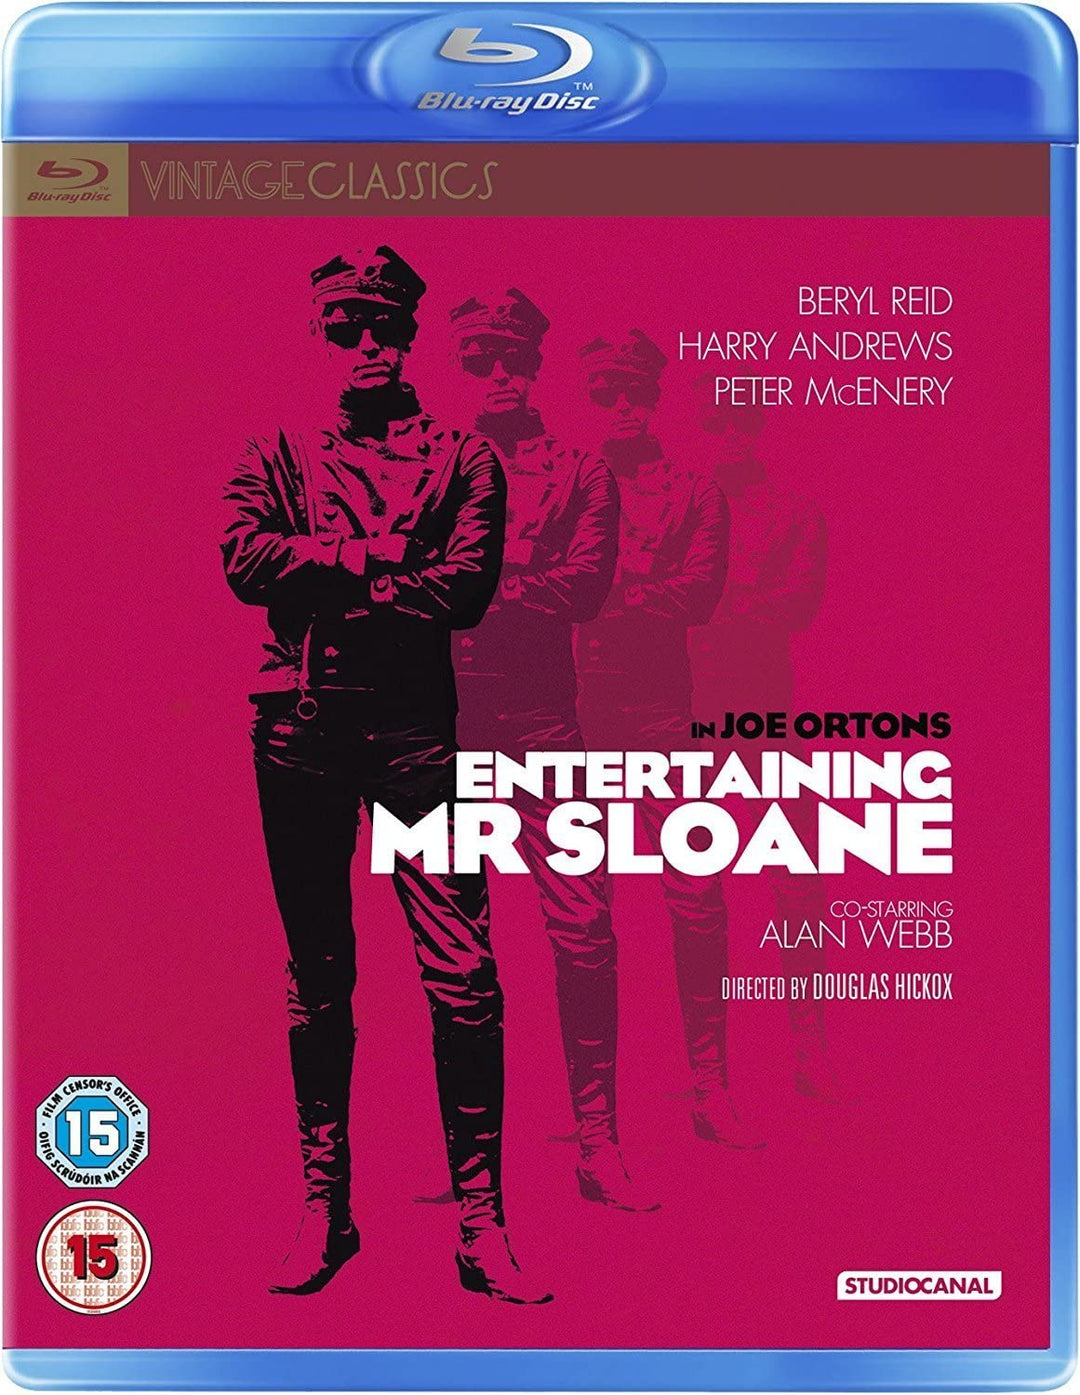 Entertaining Mr Sloane - Comedy/Dark comedy [Blu-ra]